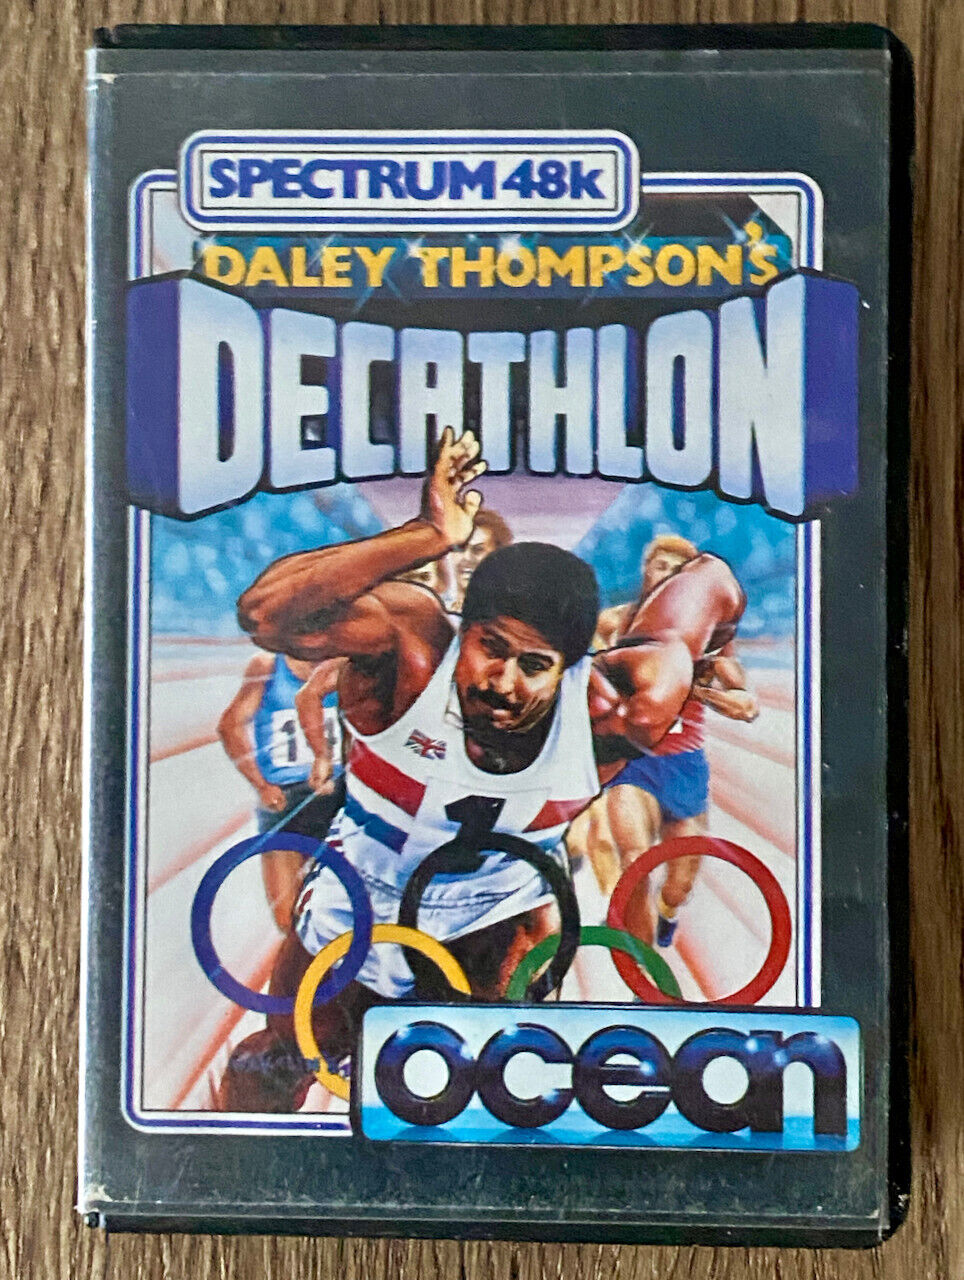 Daley Thompson´S Decatlion Amstrad Spectrum 48k / Cpc 464